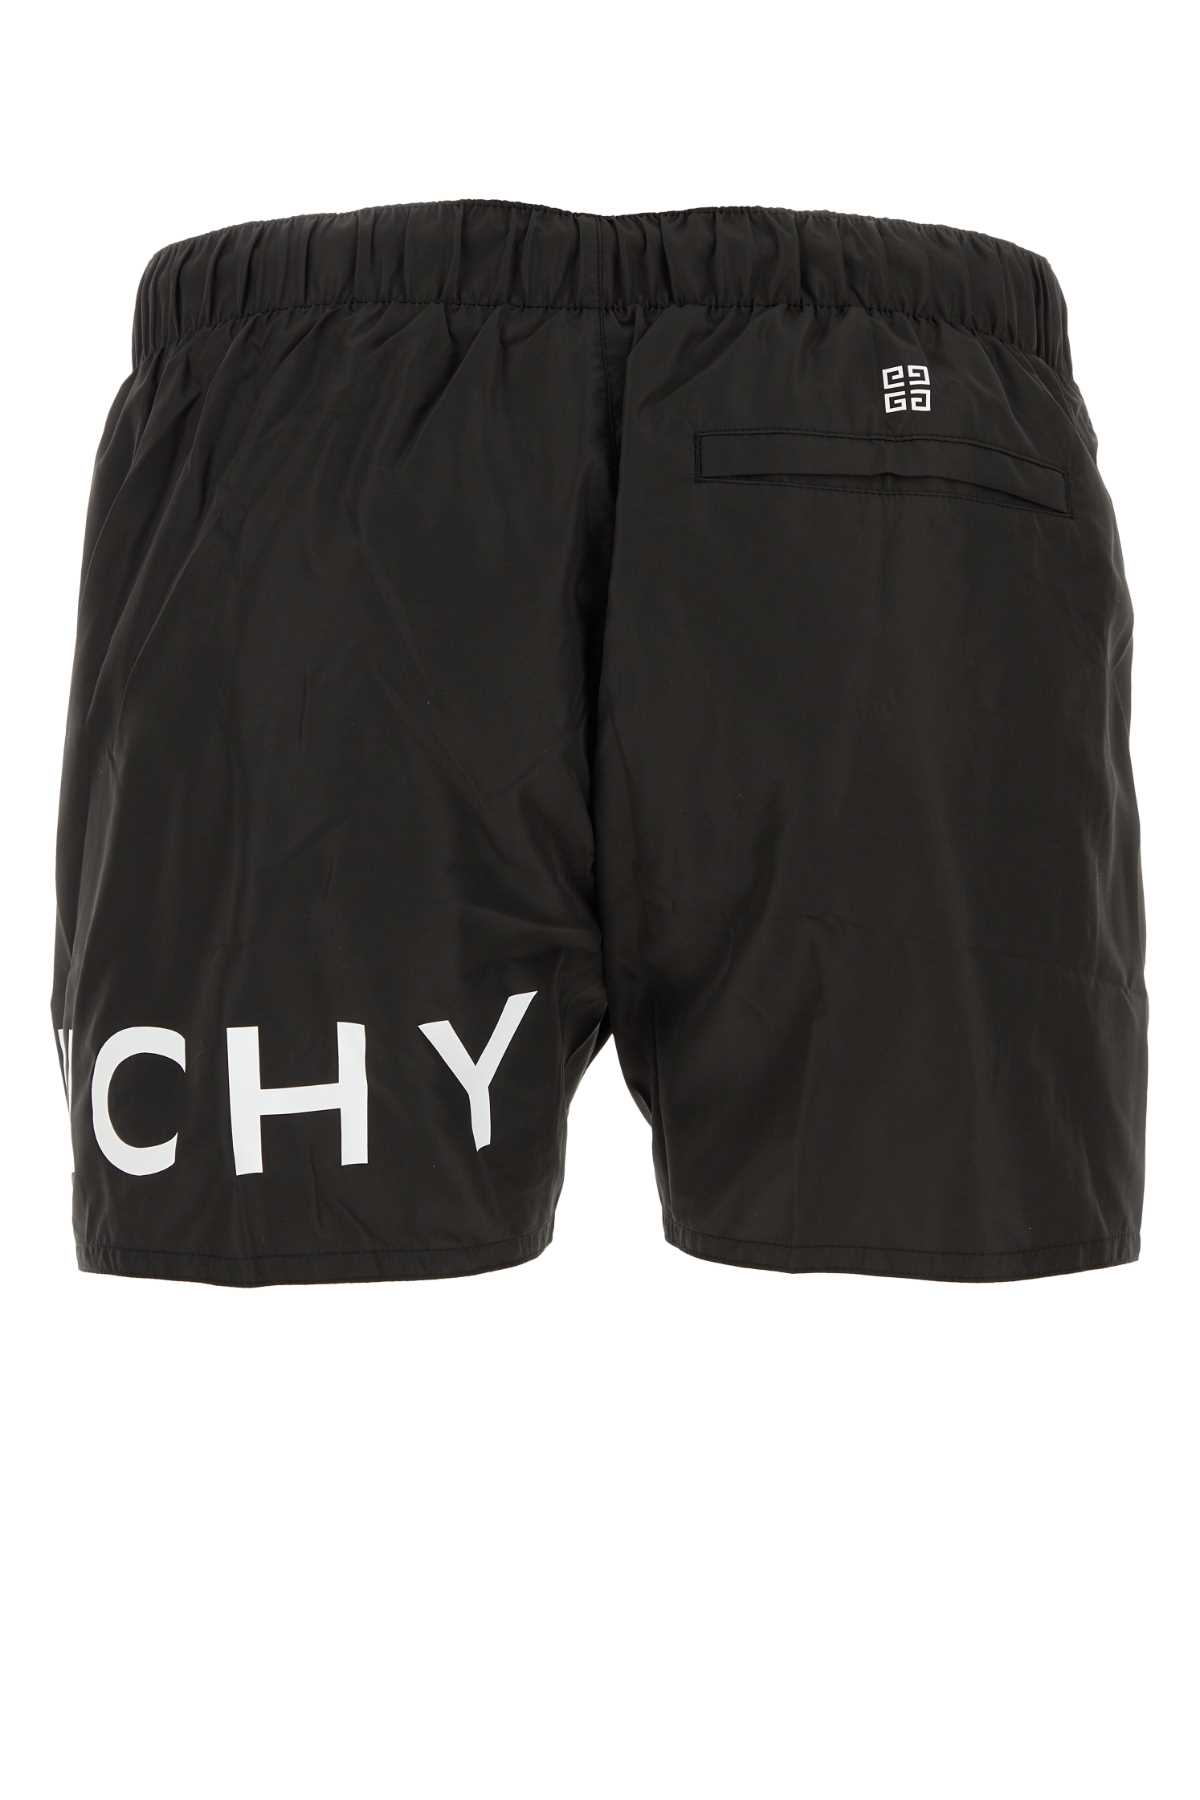 Givenchy Black Polyester Swimming Shorts